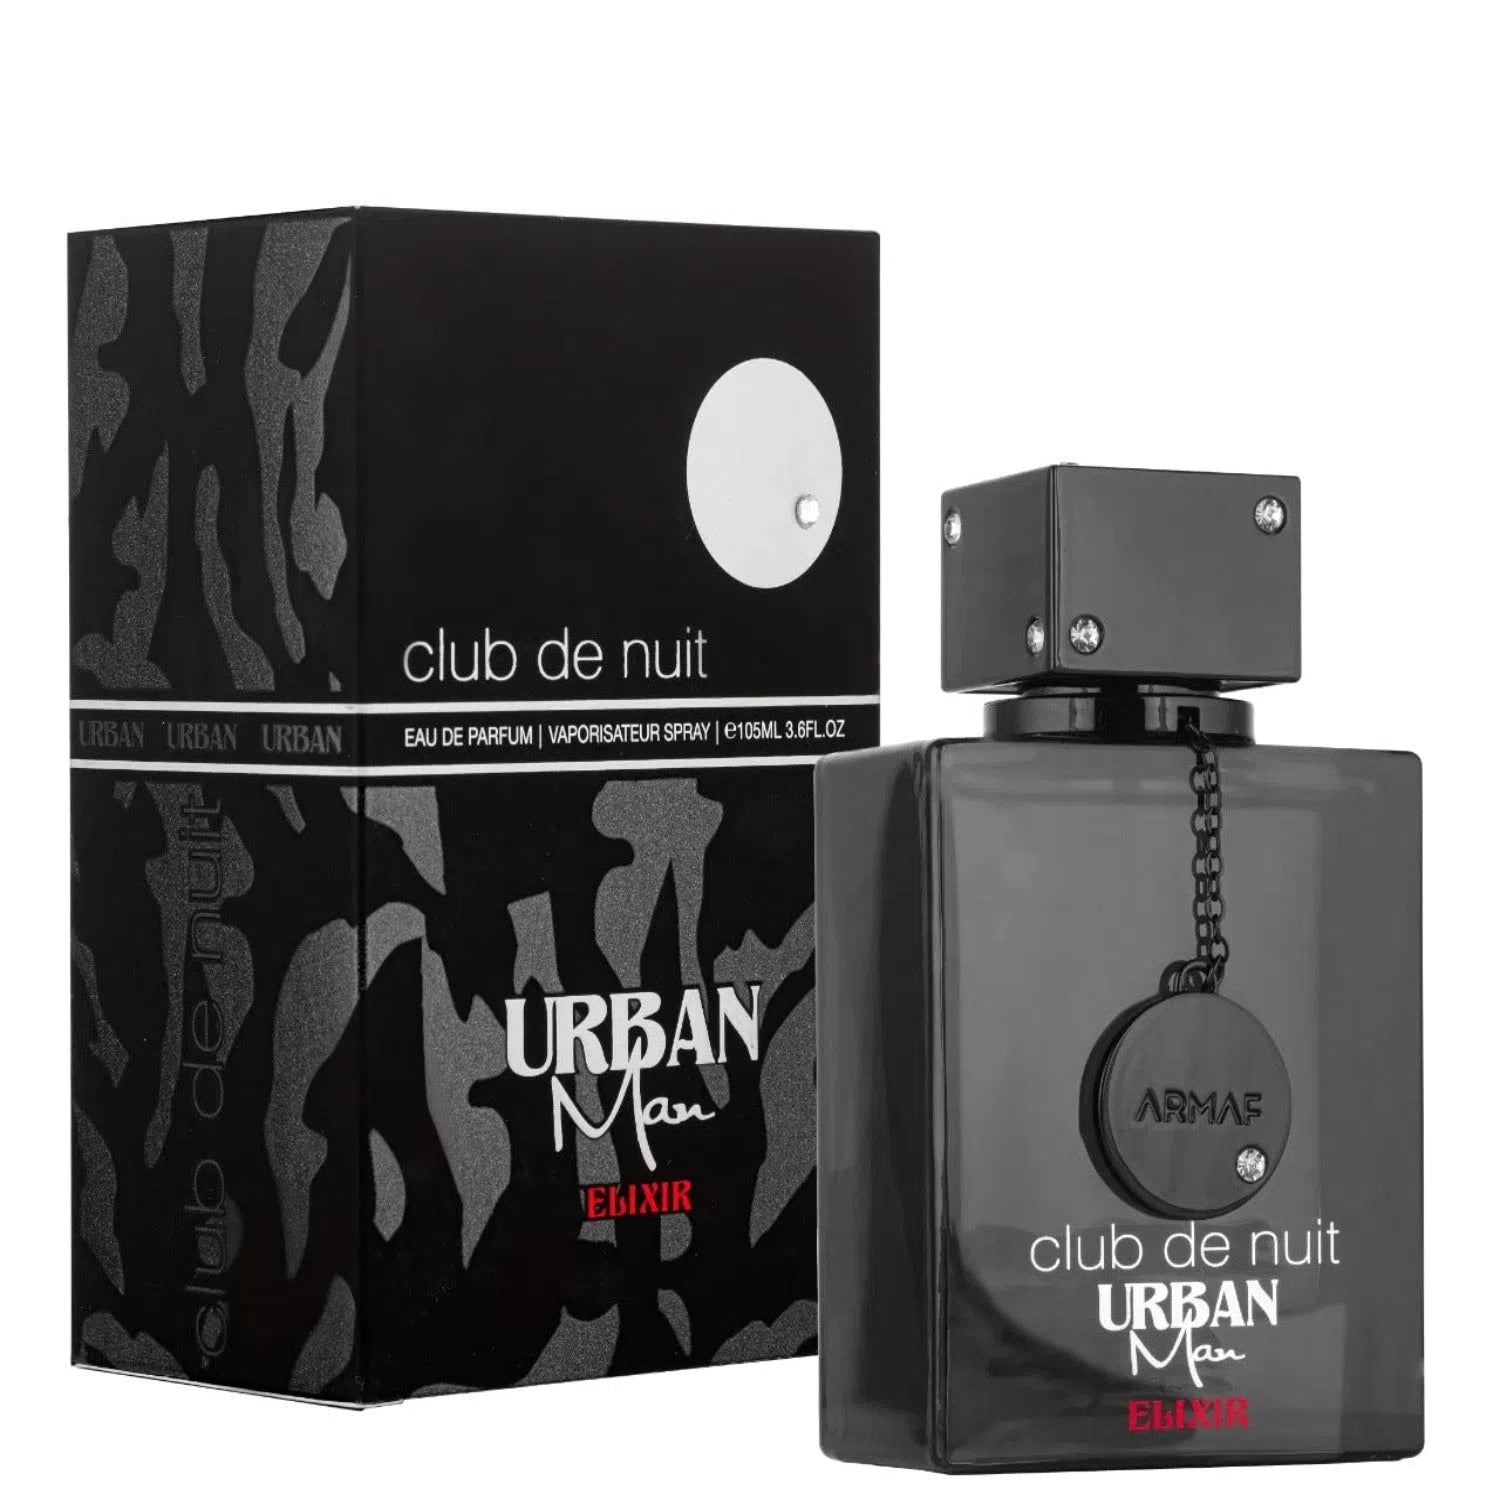 Perfume Armaf Club de Nuit Urban Elixir EDP (M) / 105 ml - 6294015163513- Prive Perfumes Honduras